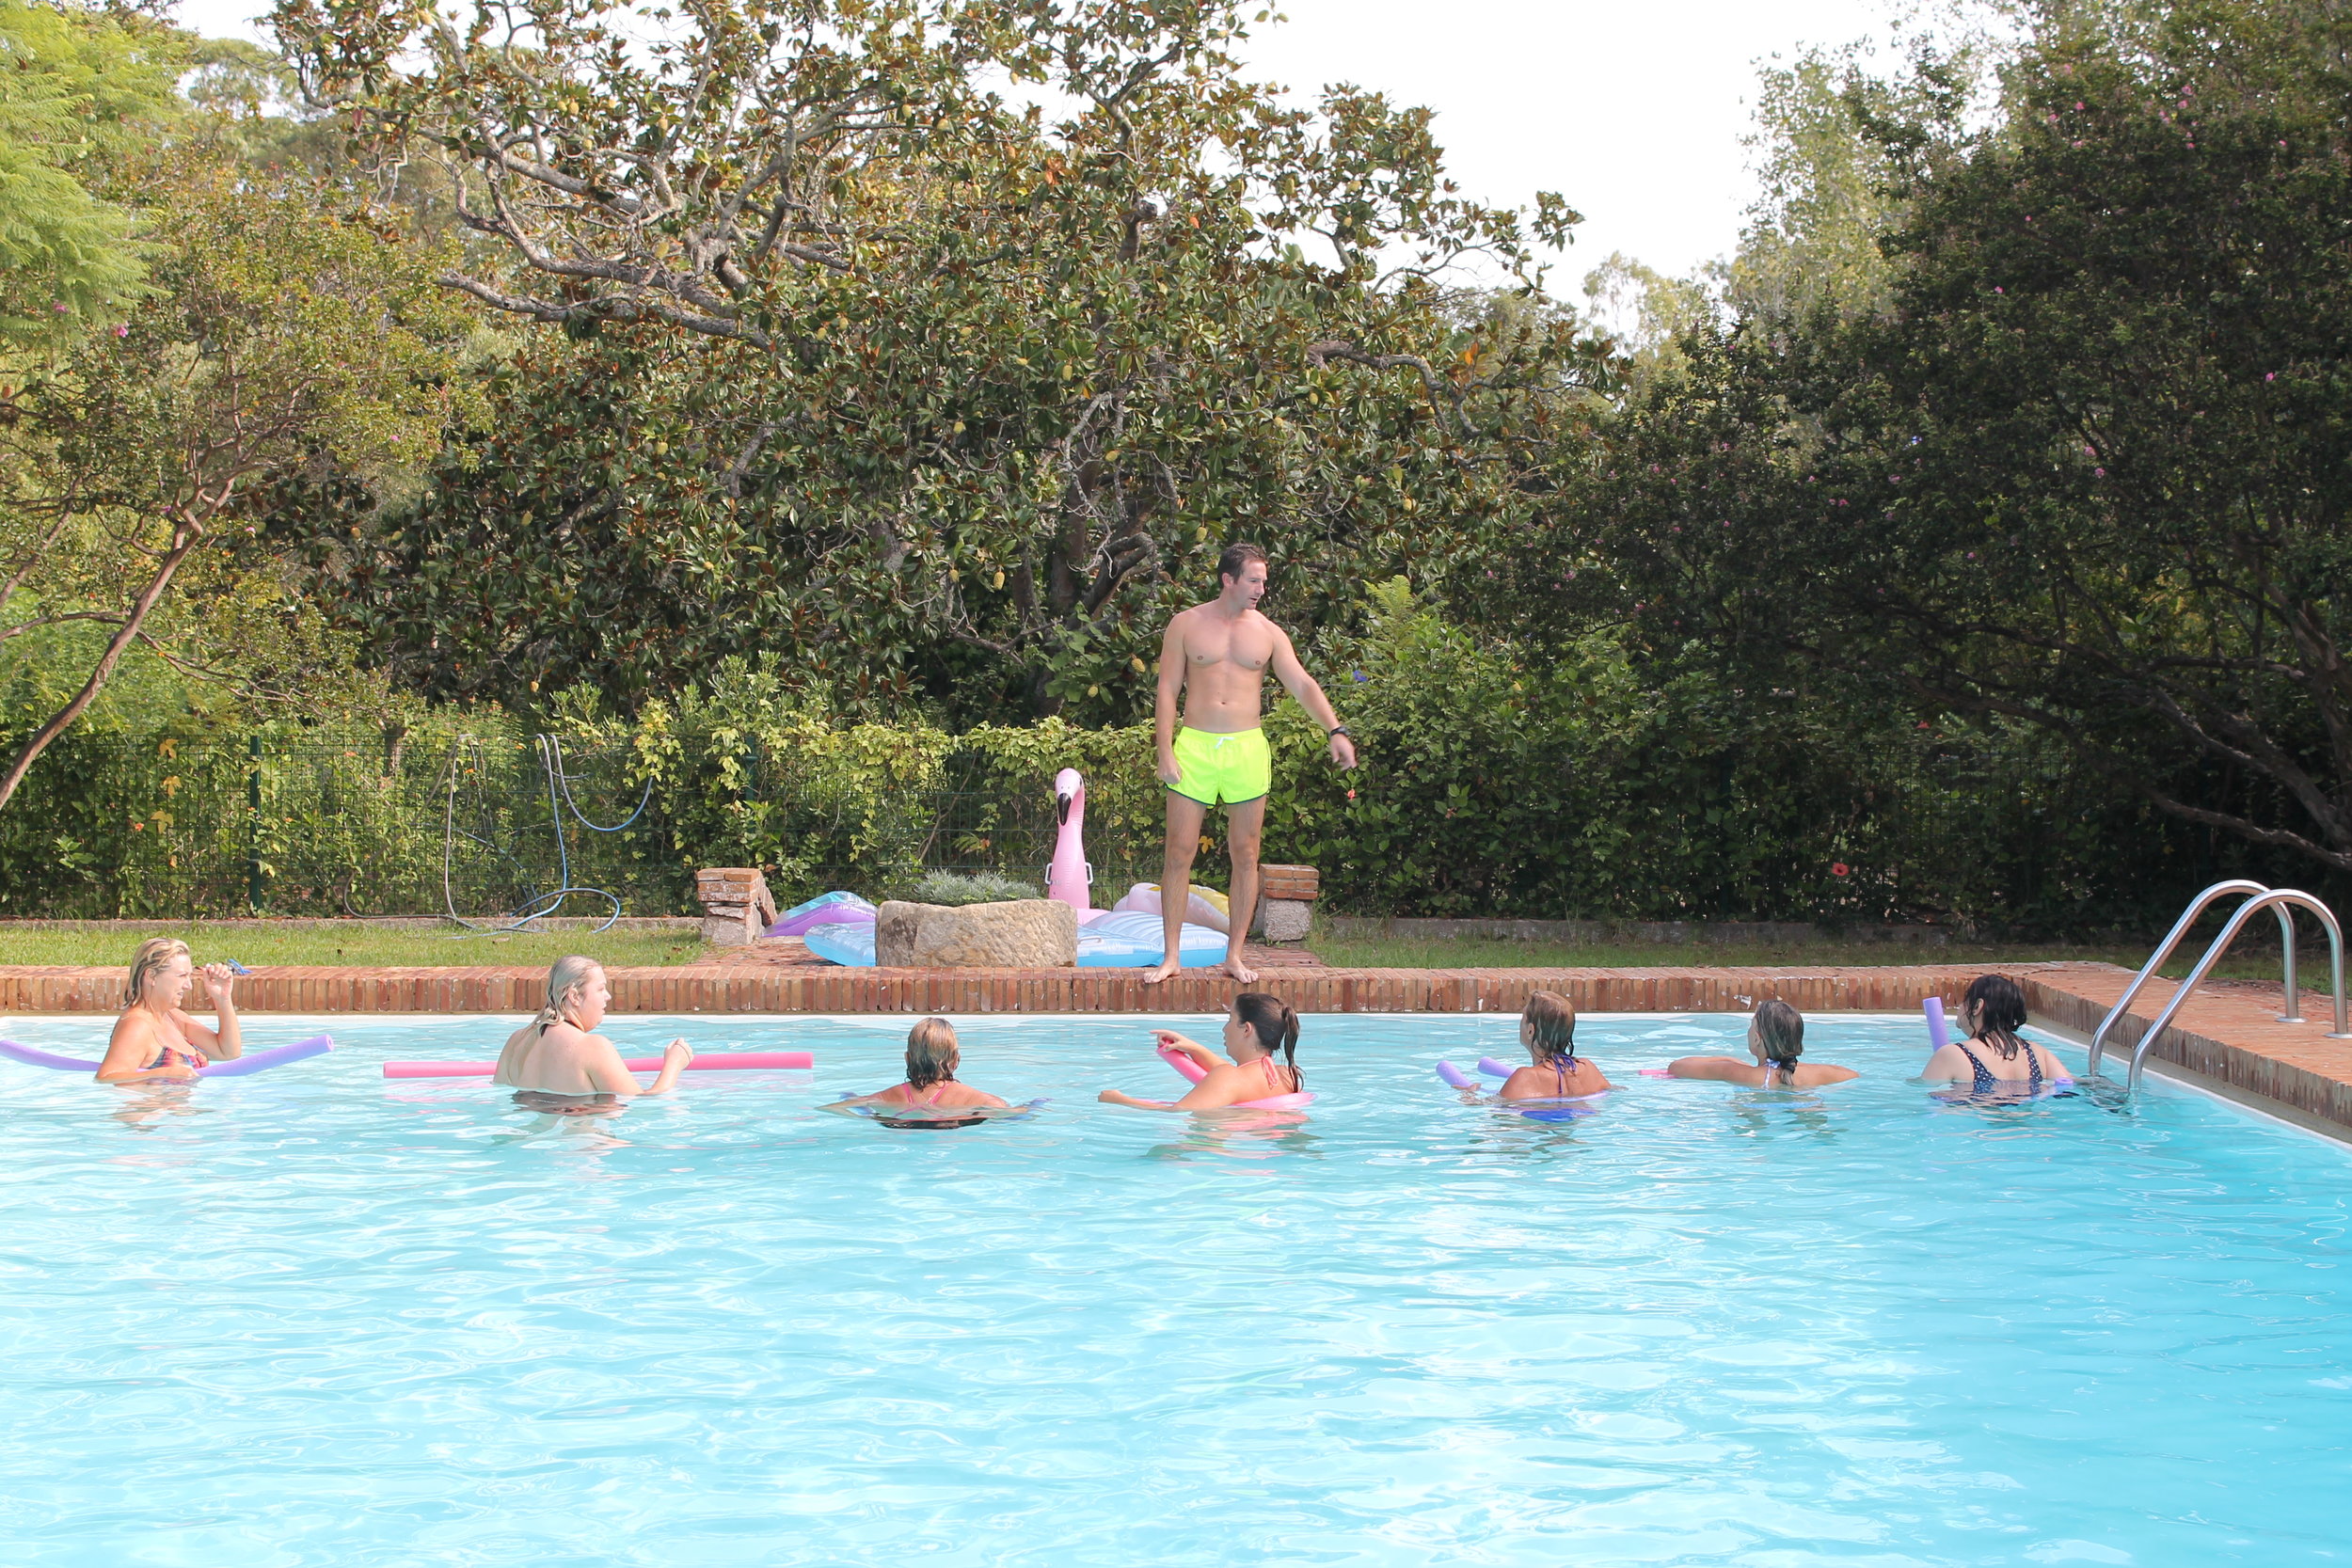 Aquarobics and pool games make the fitness retreat fun and interesting